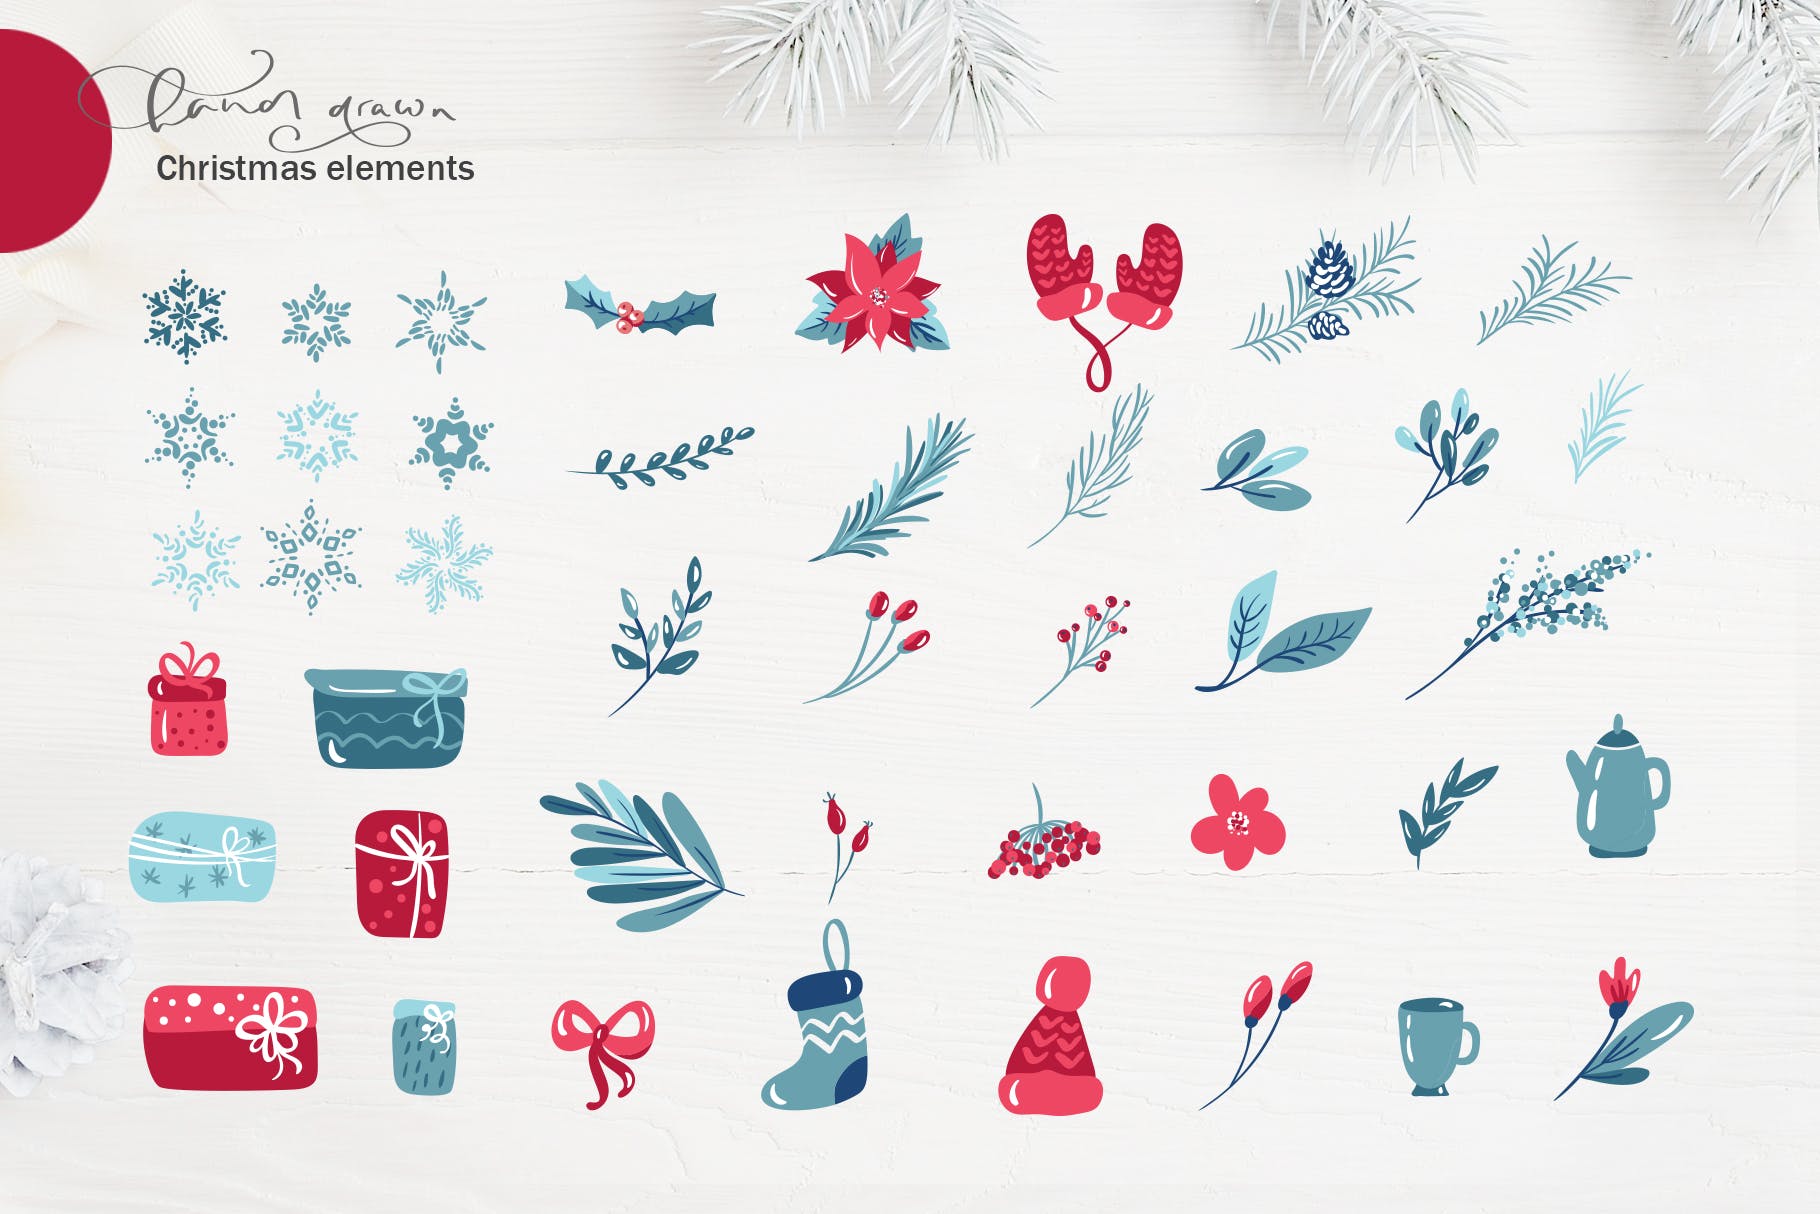 圣诞节主题元素水彩手绘设计素材 Christmas floral holiday elements插图(3)